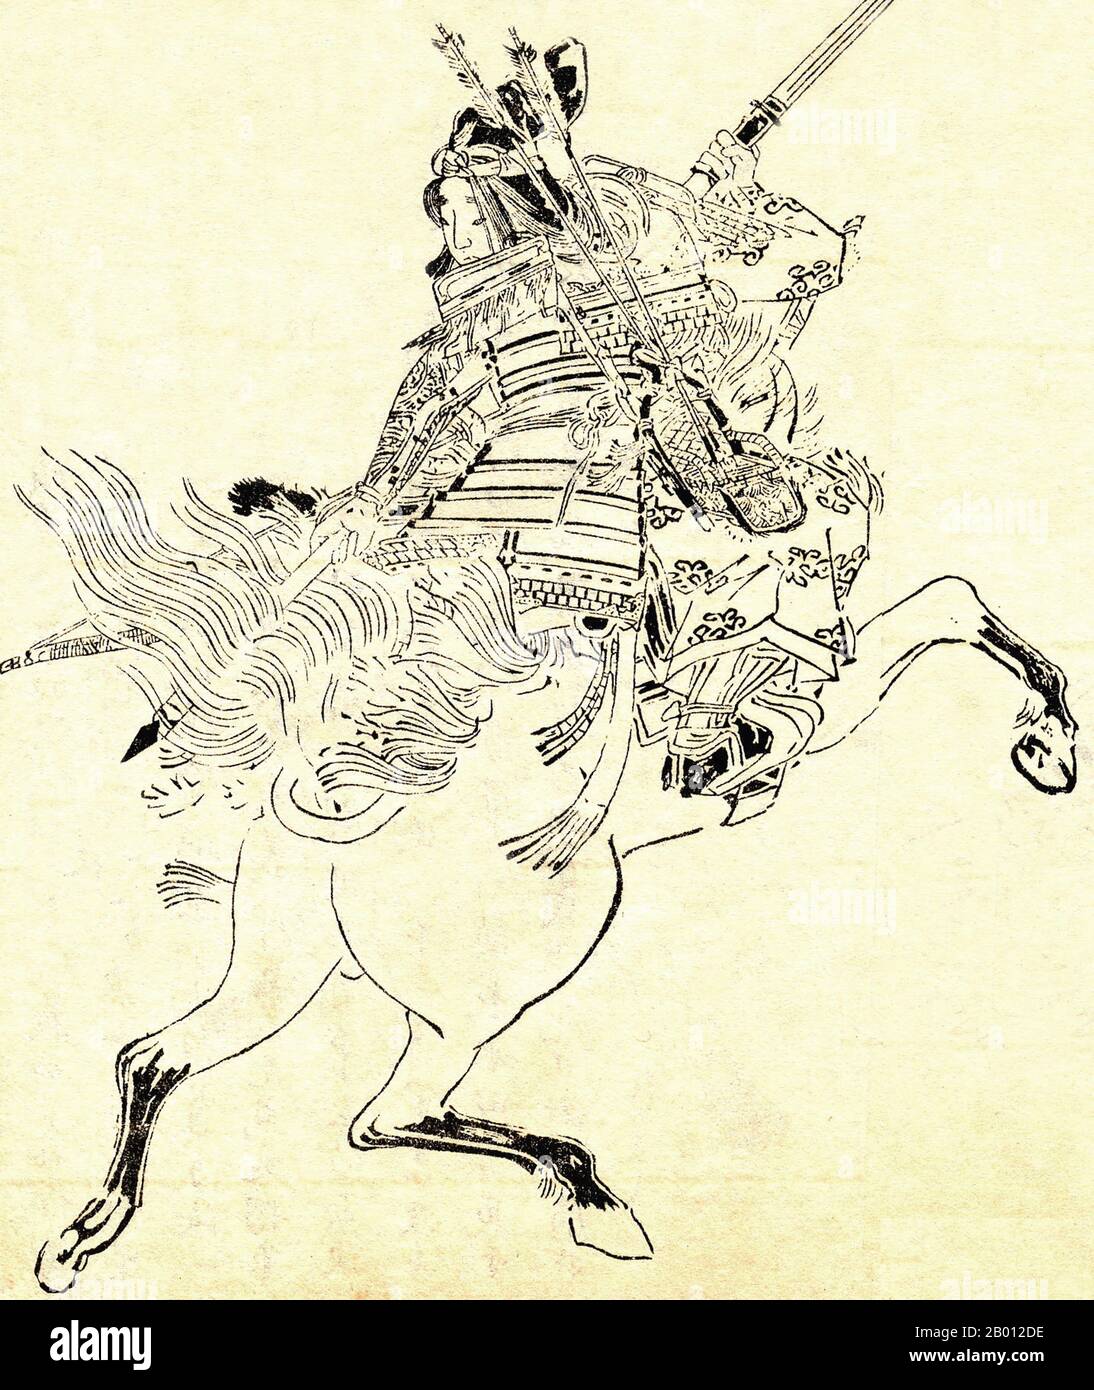 japanese samurai battle drawing